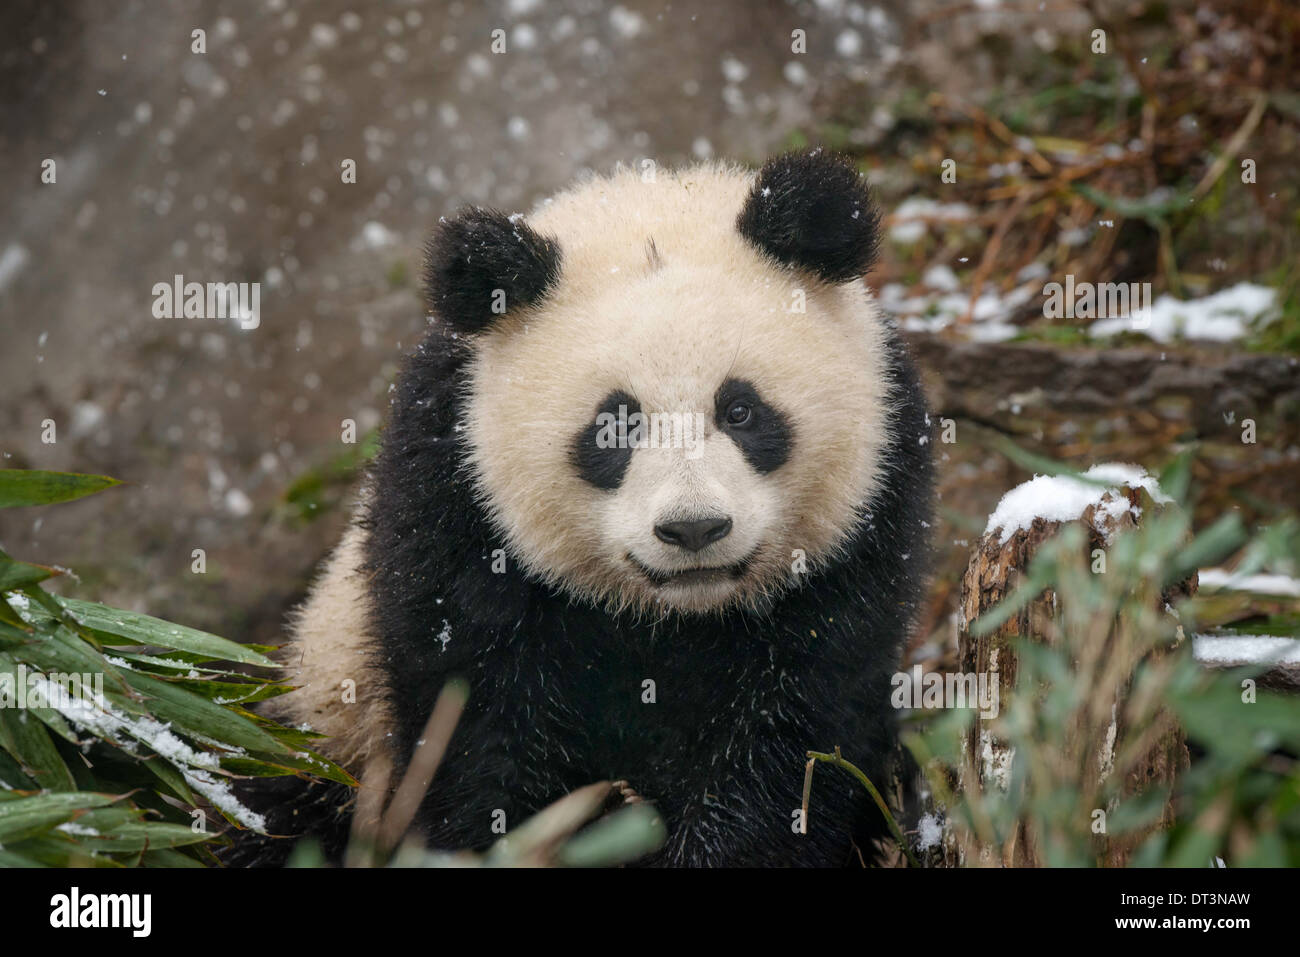 Baby Giant Panda in snow Stock Photo